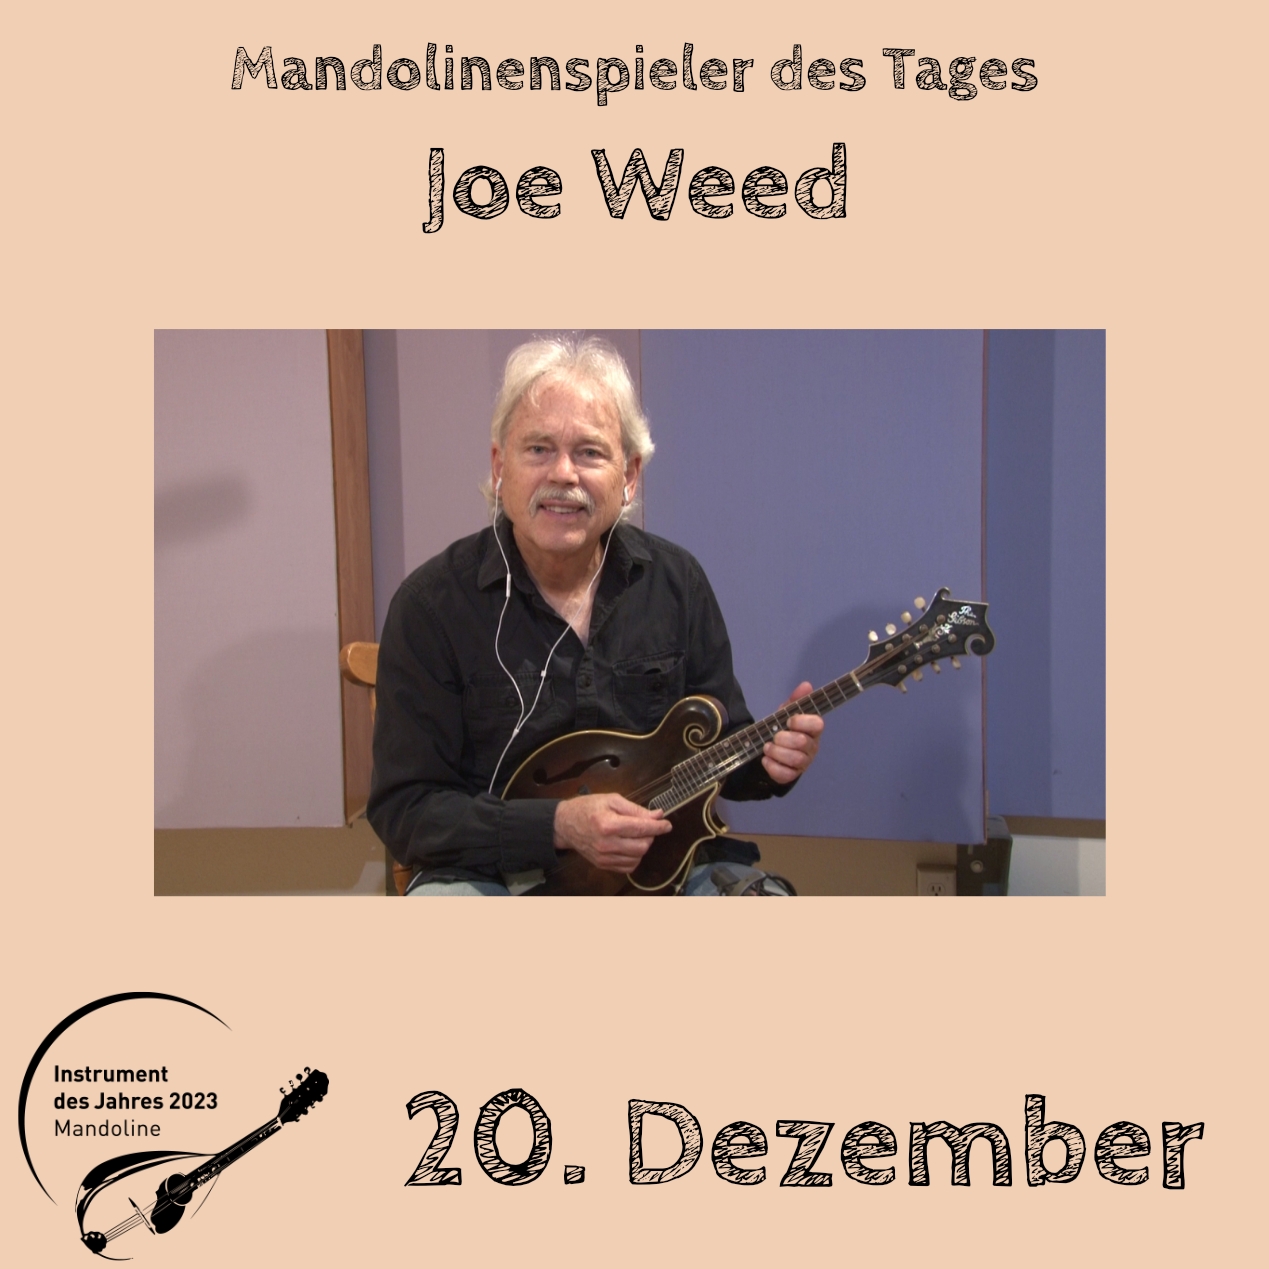 20. Dezember - Joe Weed Instrument des Jahres 2023 Mandolinenspieler Mandolinenspielerin des Tages